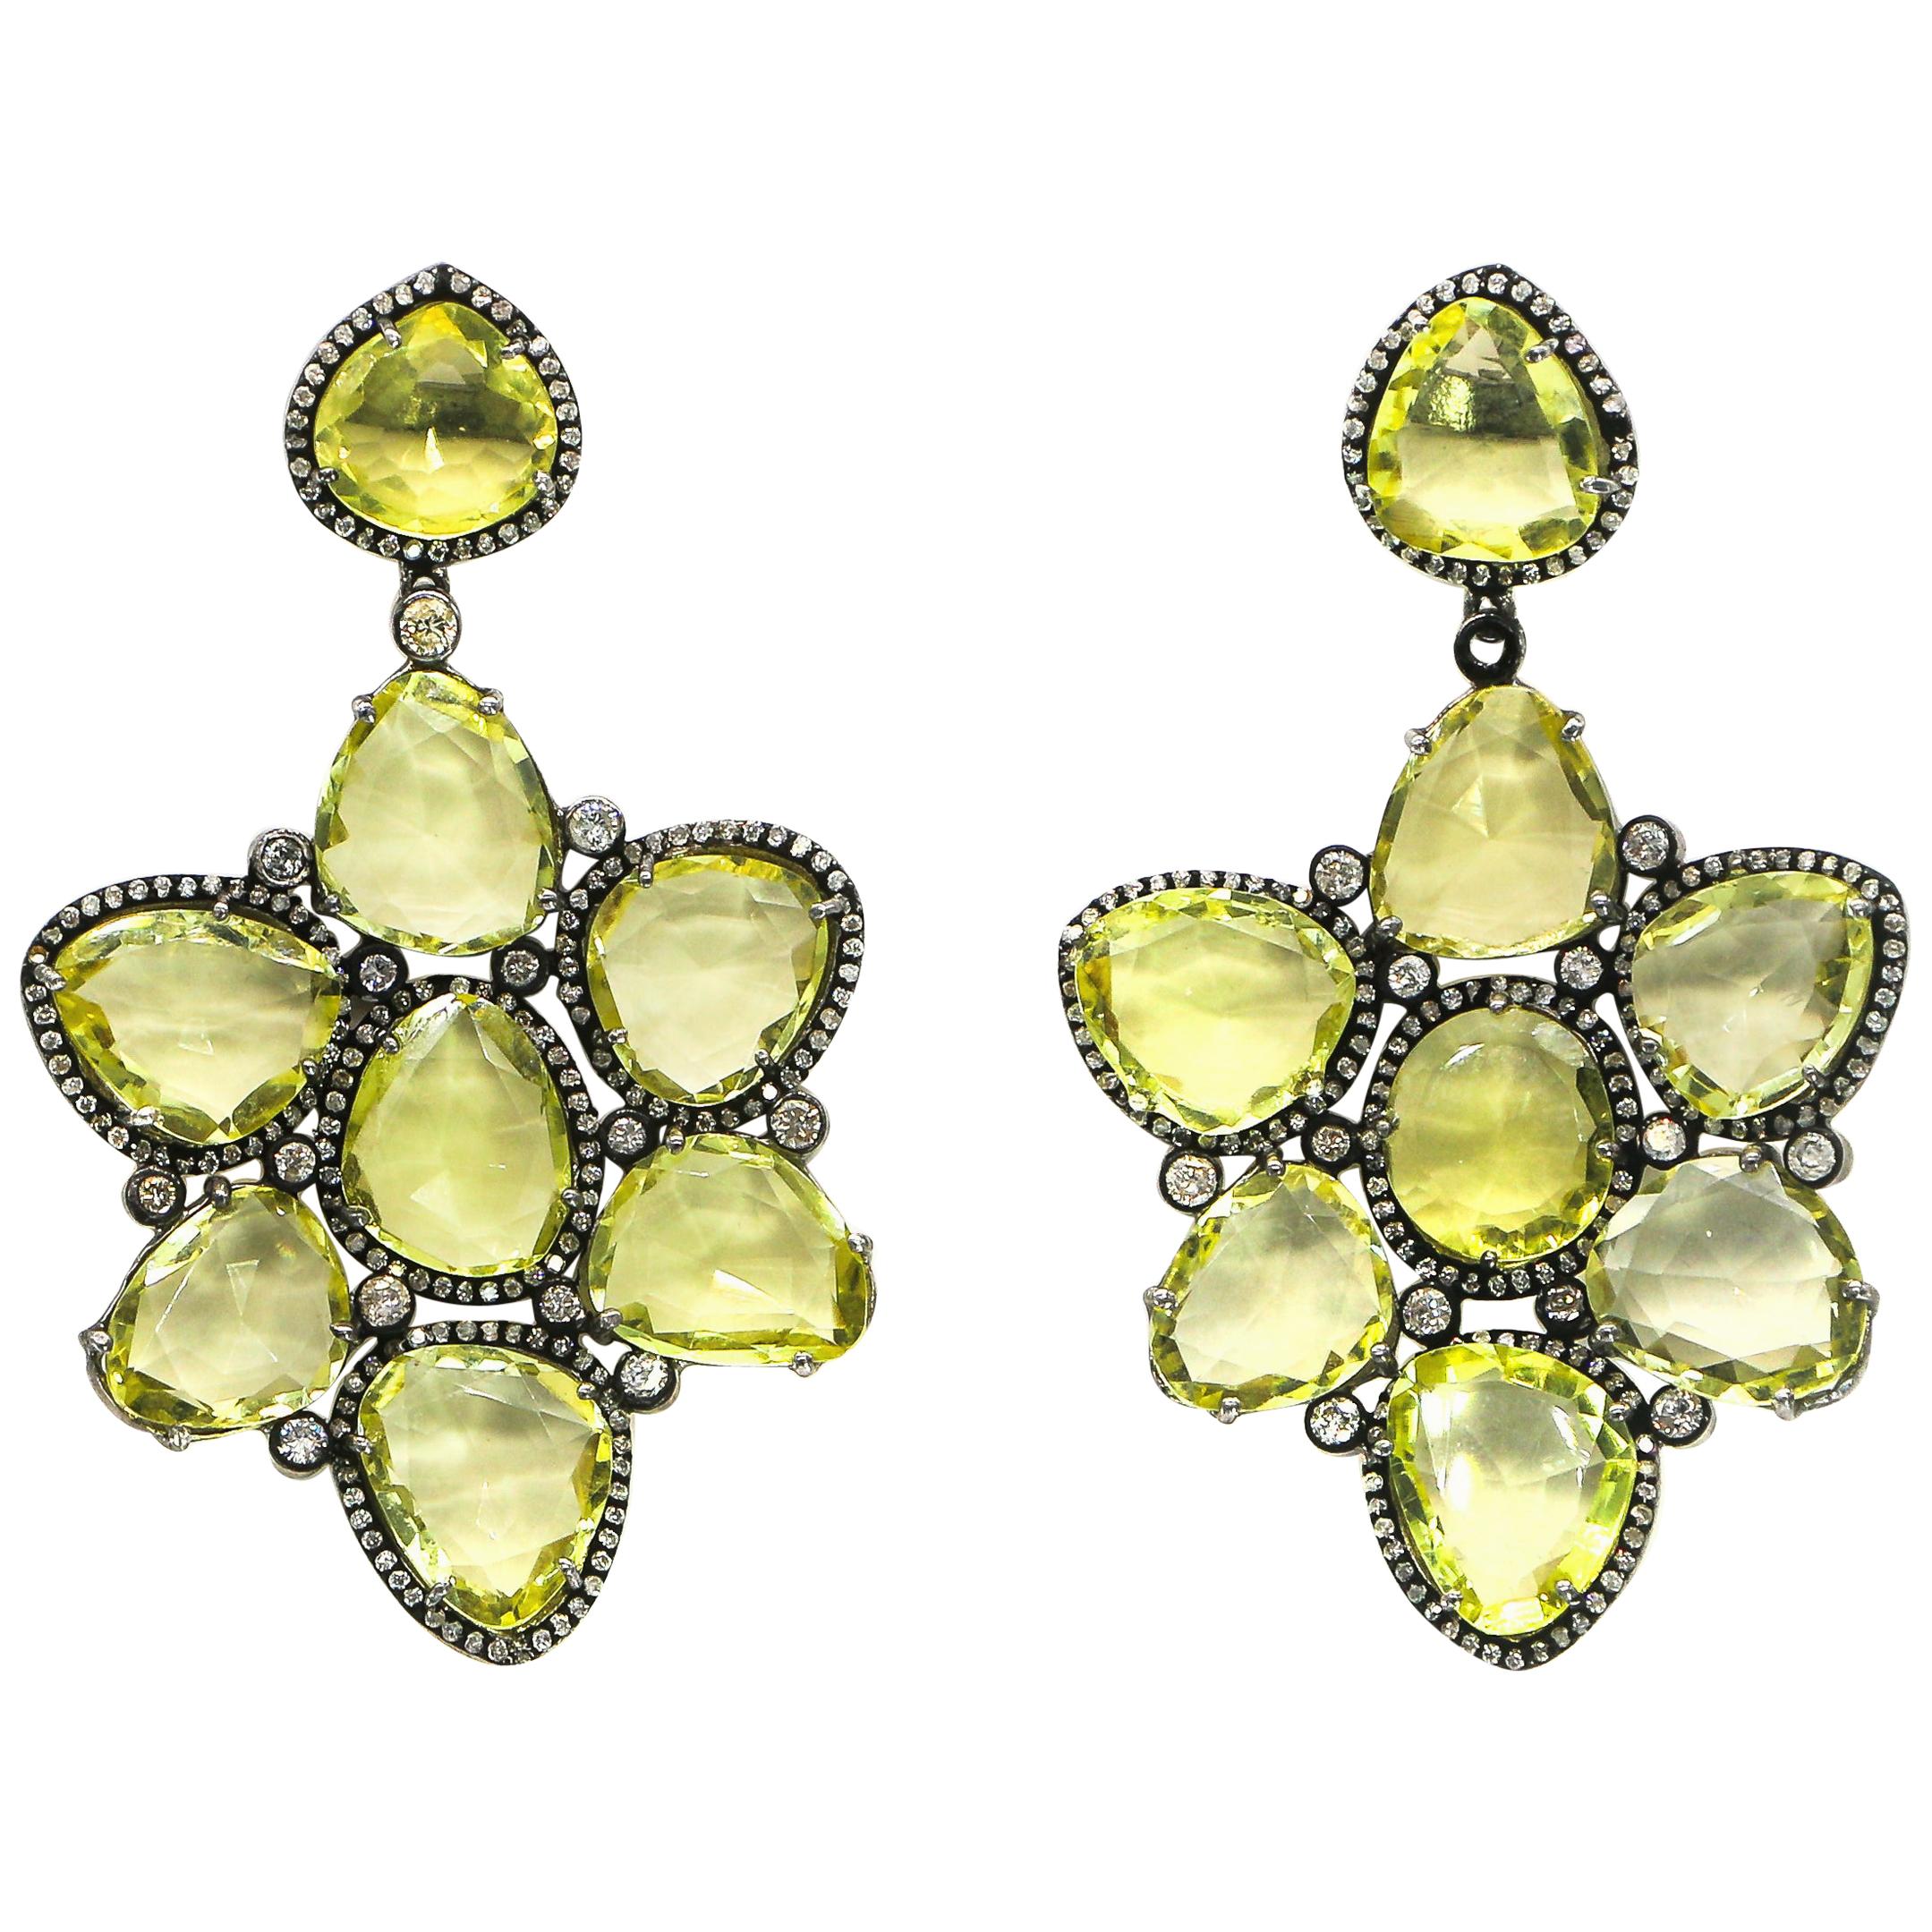 Lemon Quartz and Diamonds Earrings 14 Karat Gold and Silver